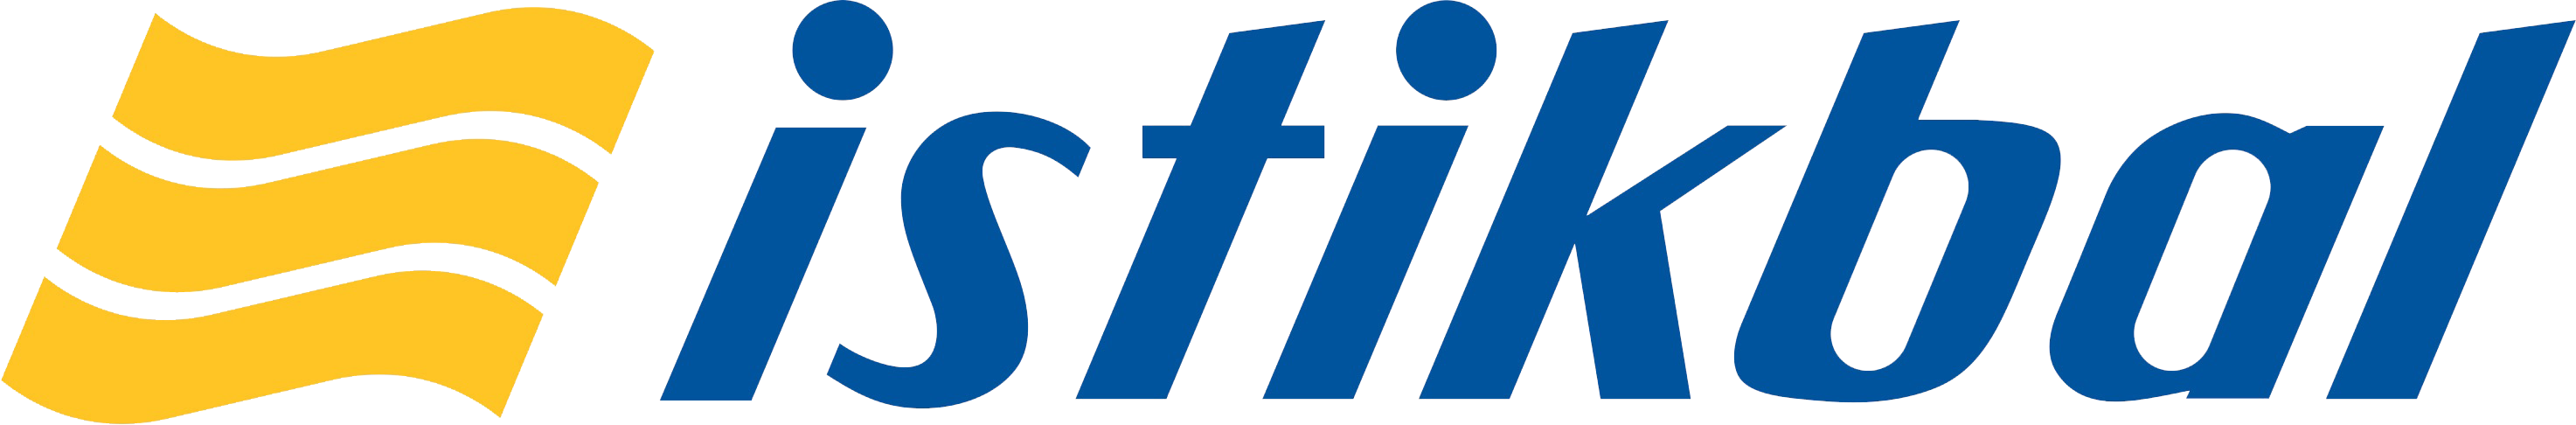 istikbal logo